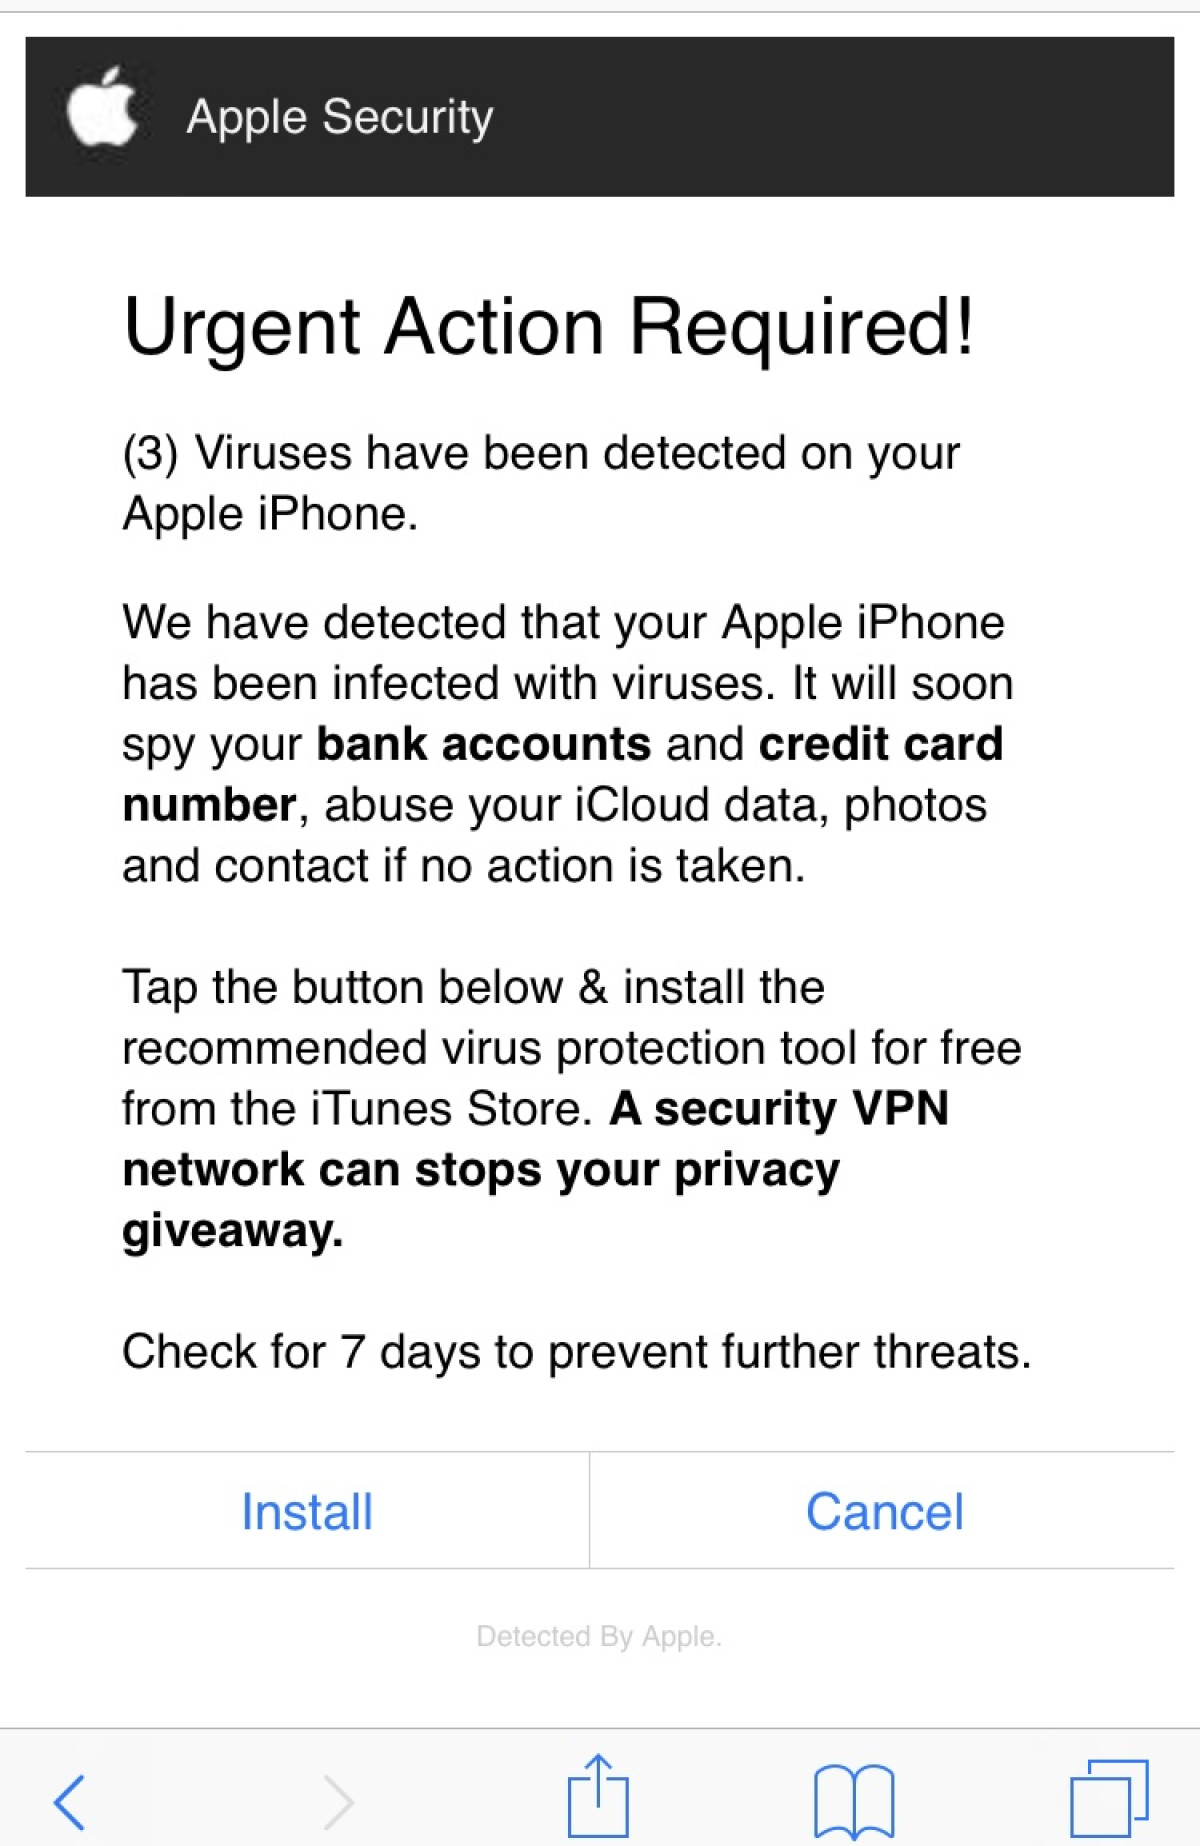 Apple security alert notification